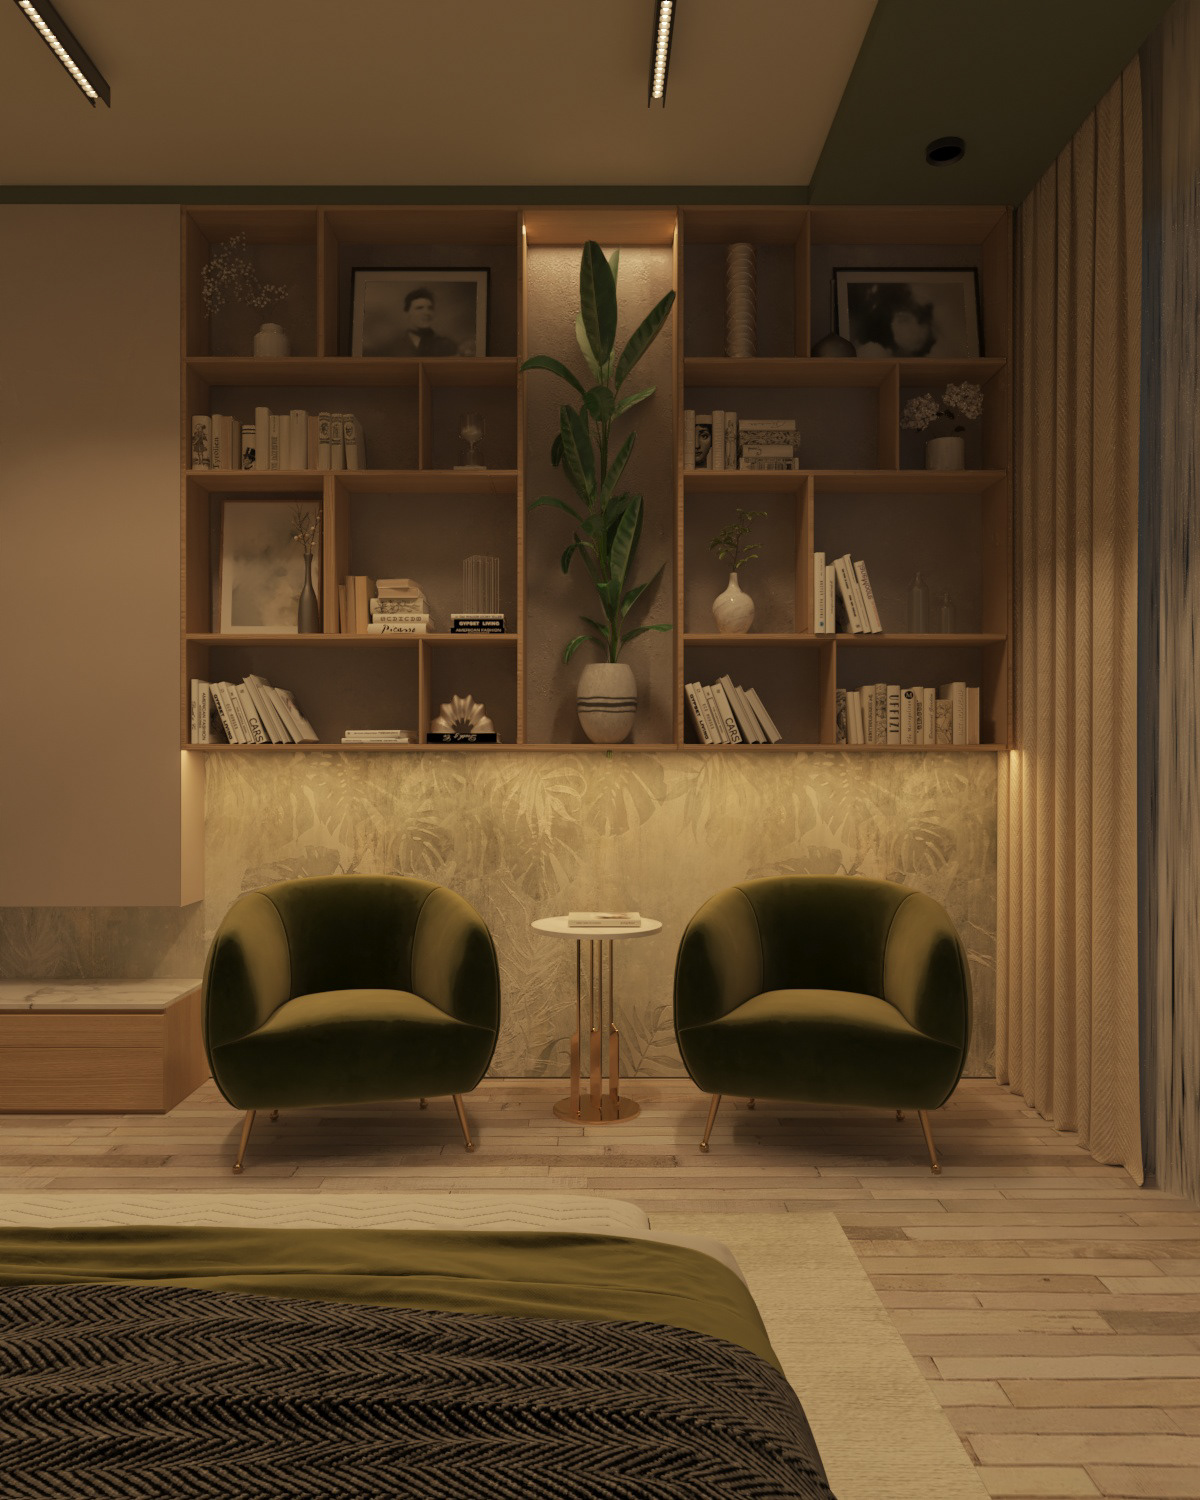 Interior bedroom architecture visualization 3ds max modern Render architectural design architect